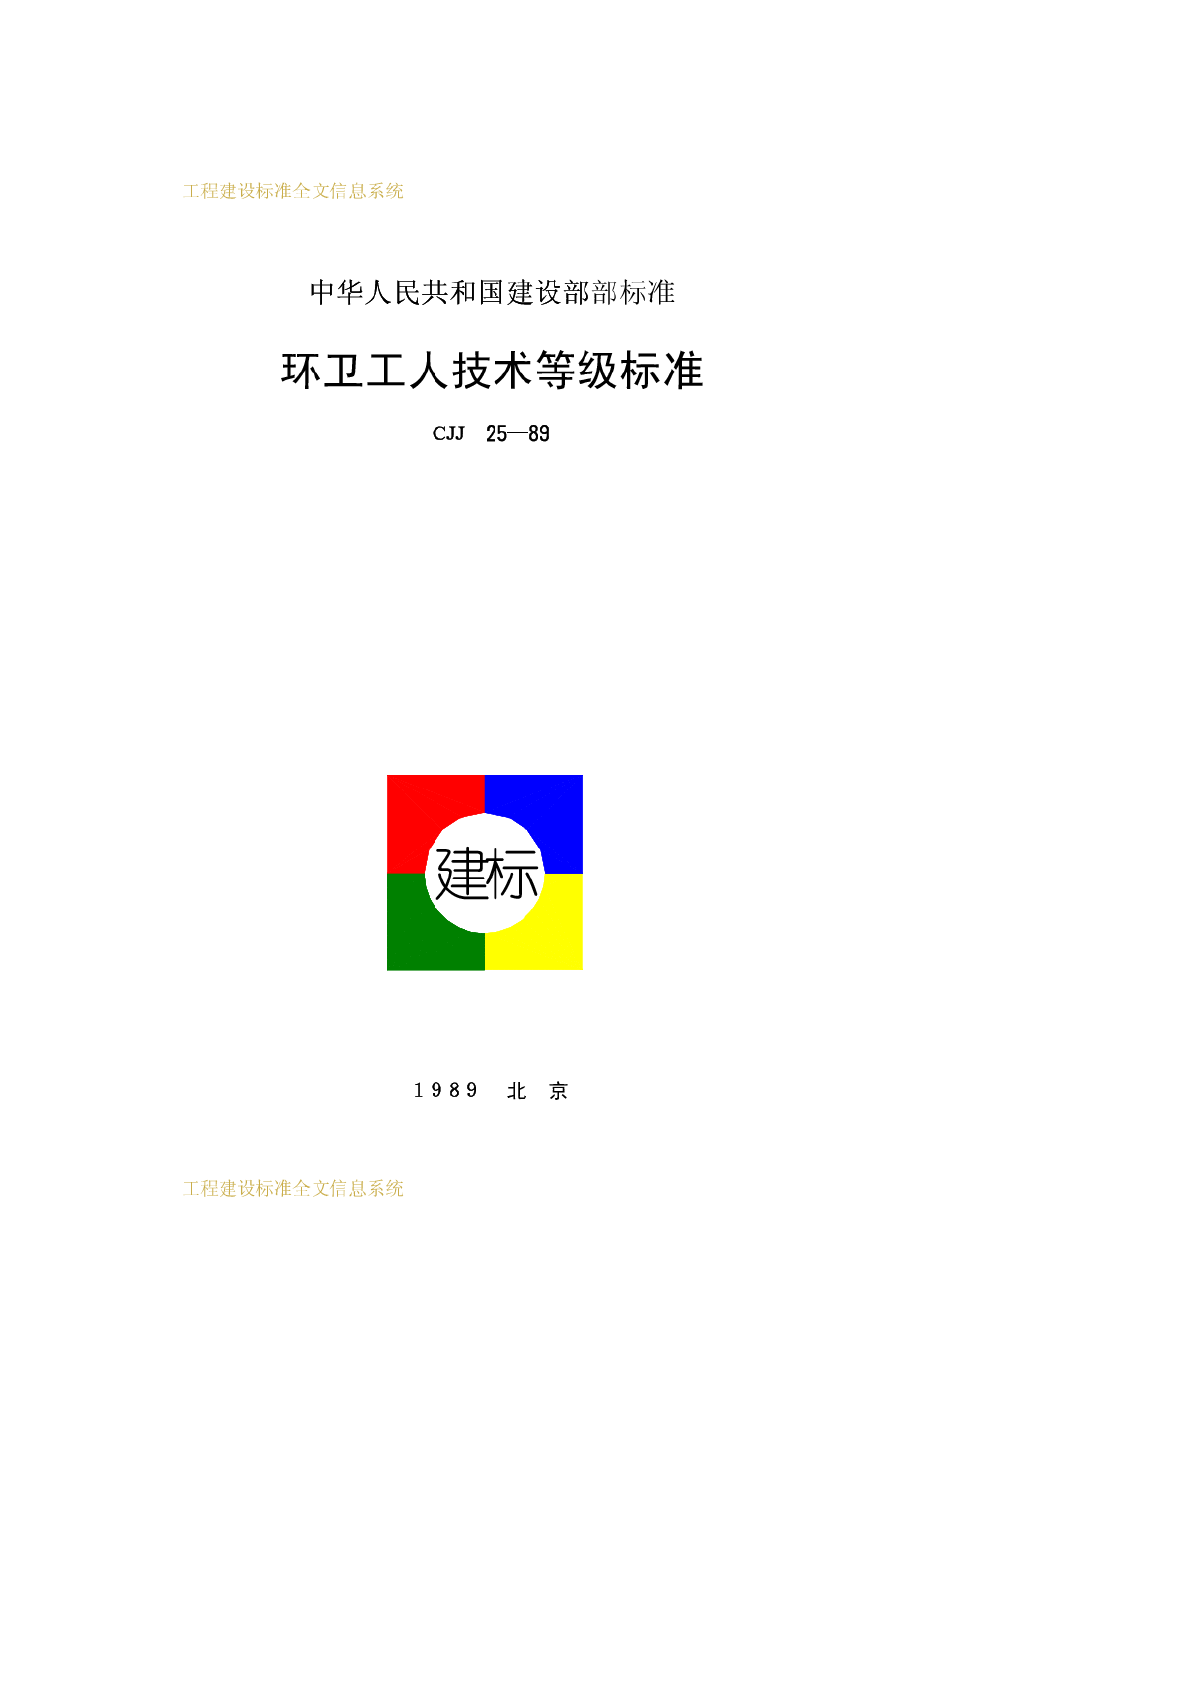 CJJ 25-1989 环卫工人技术等级标准-图一